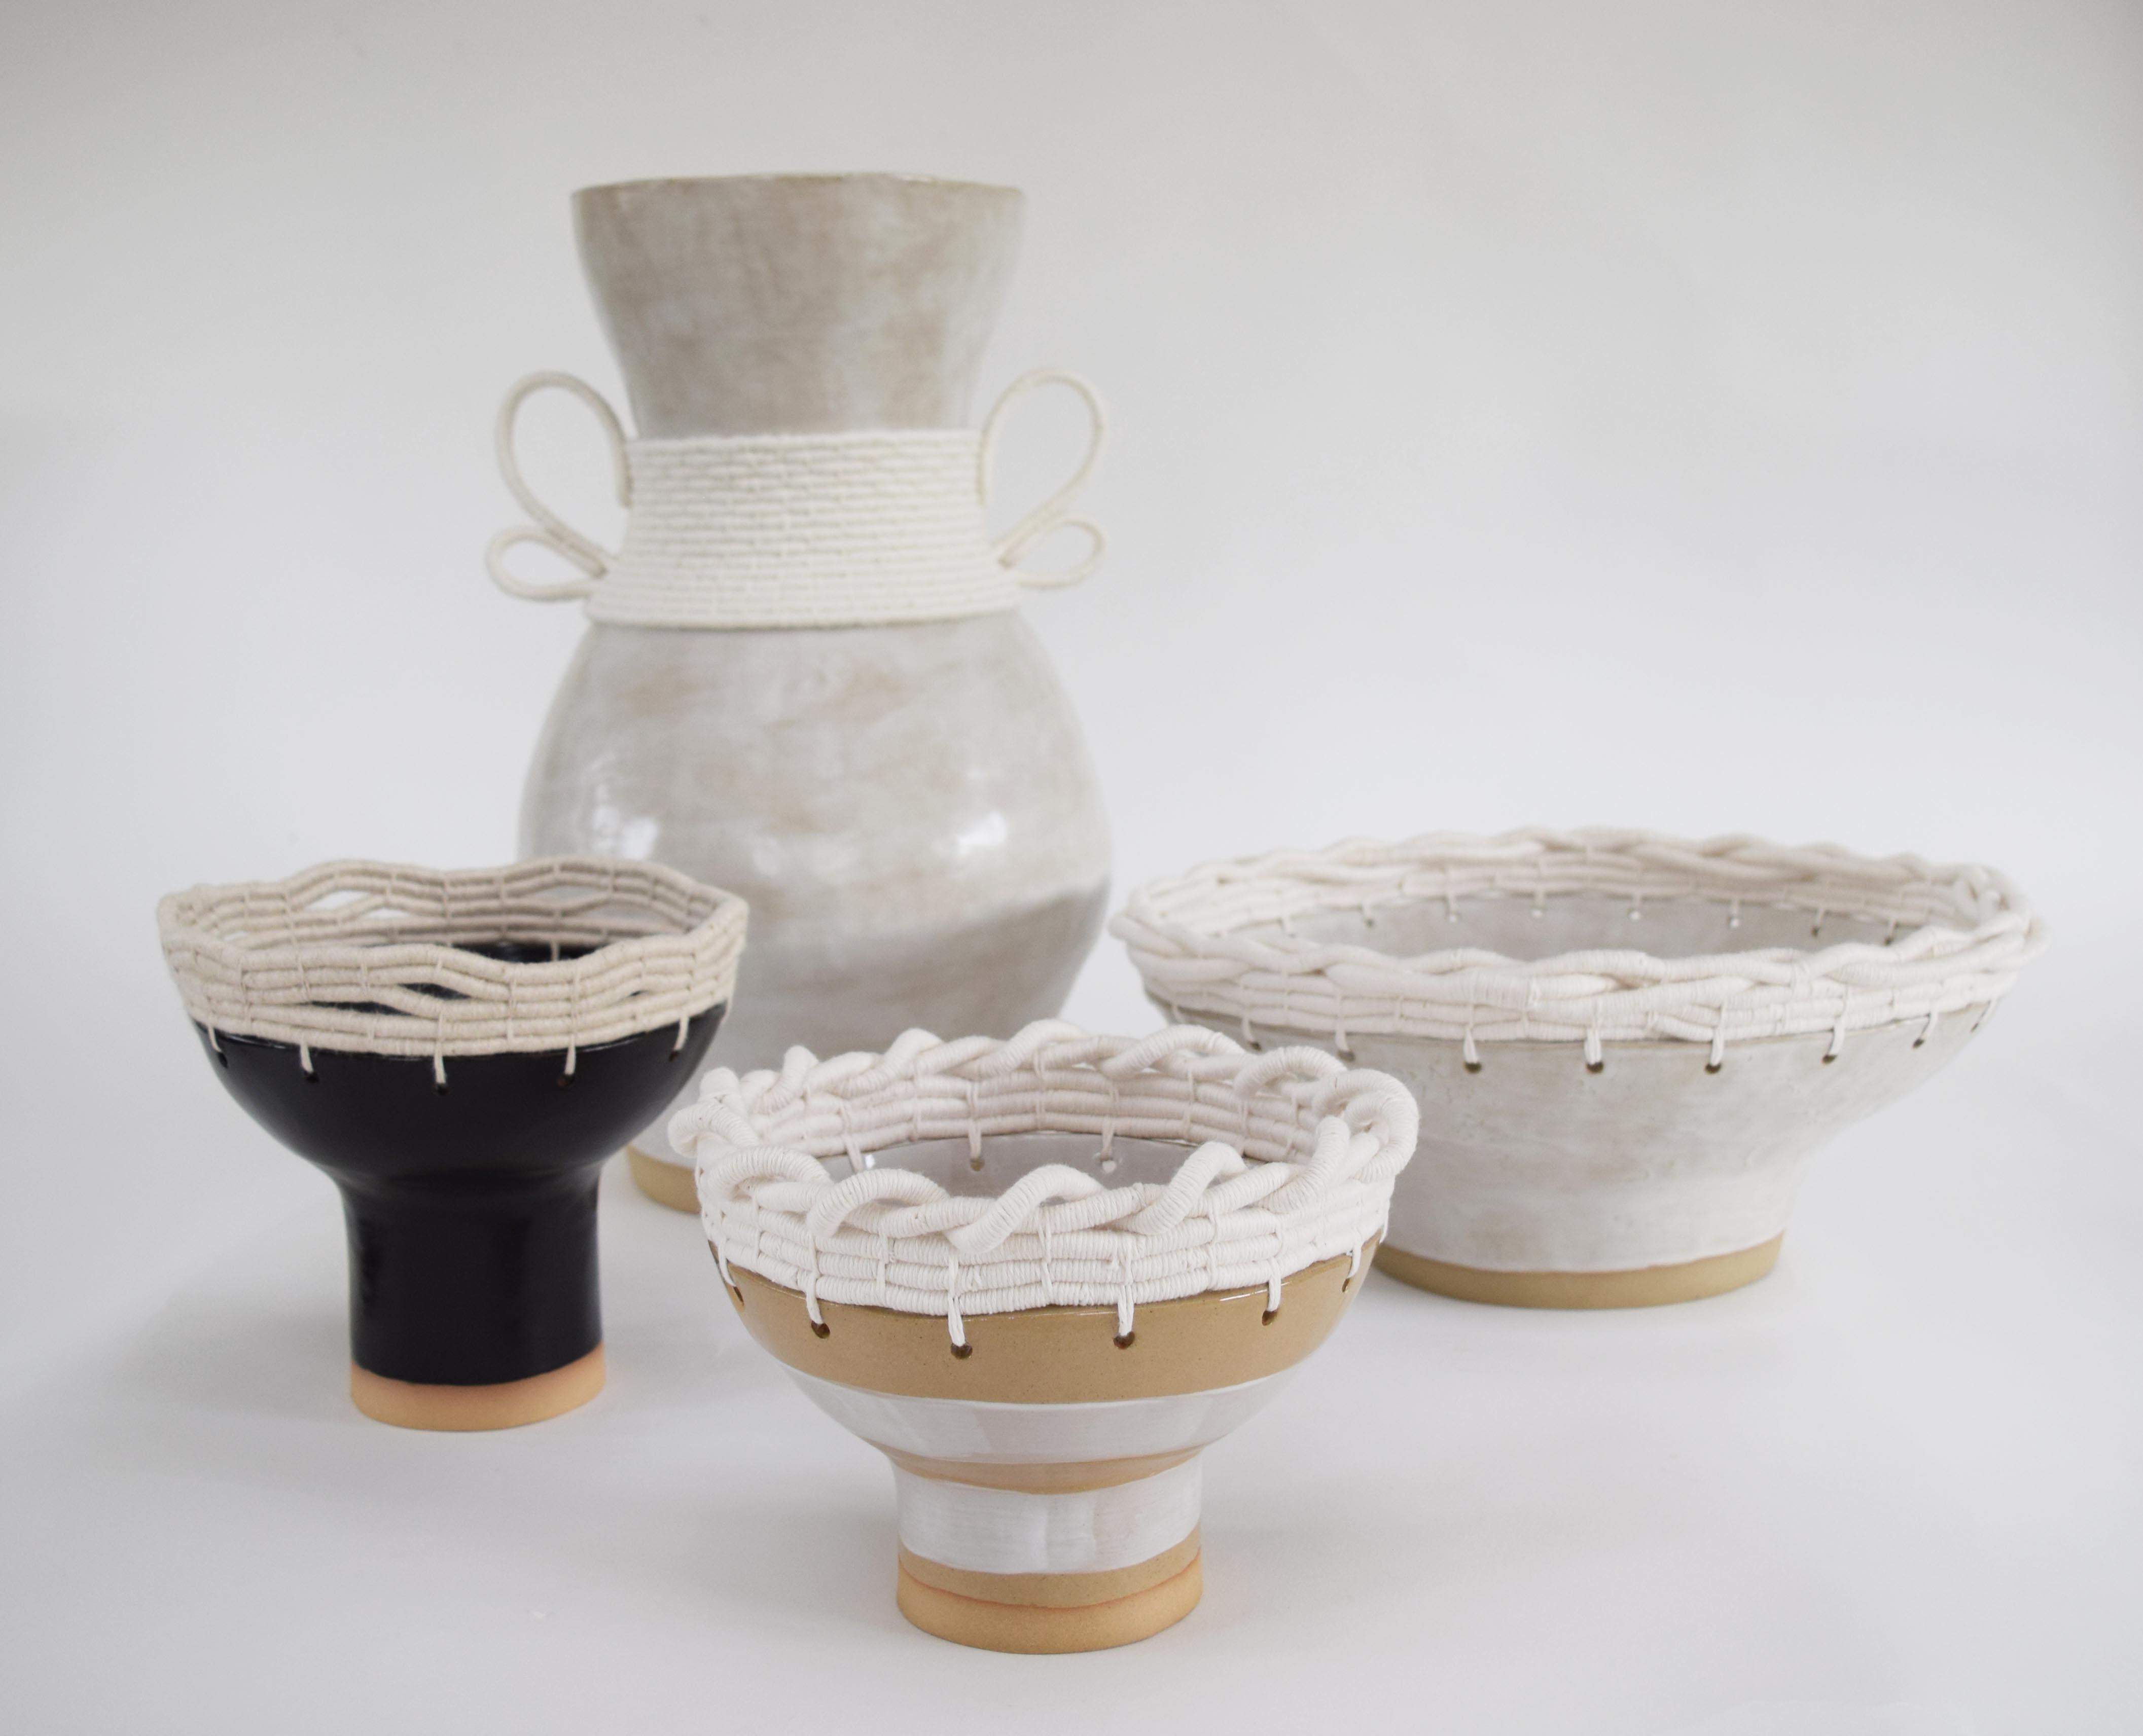 Hand-Knotted OOAK Handmade Ceramic Bowl #799, Hand Glazed White Stripes & Woven Cotton Upper